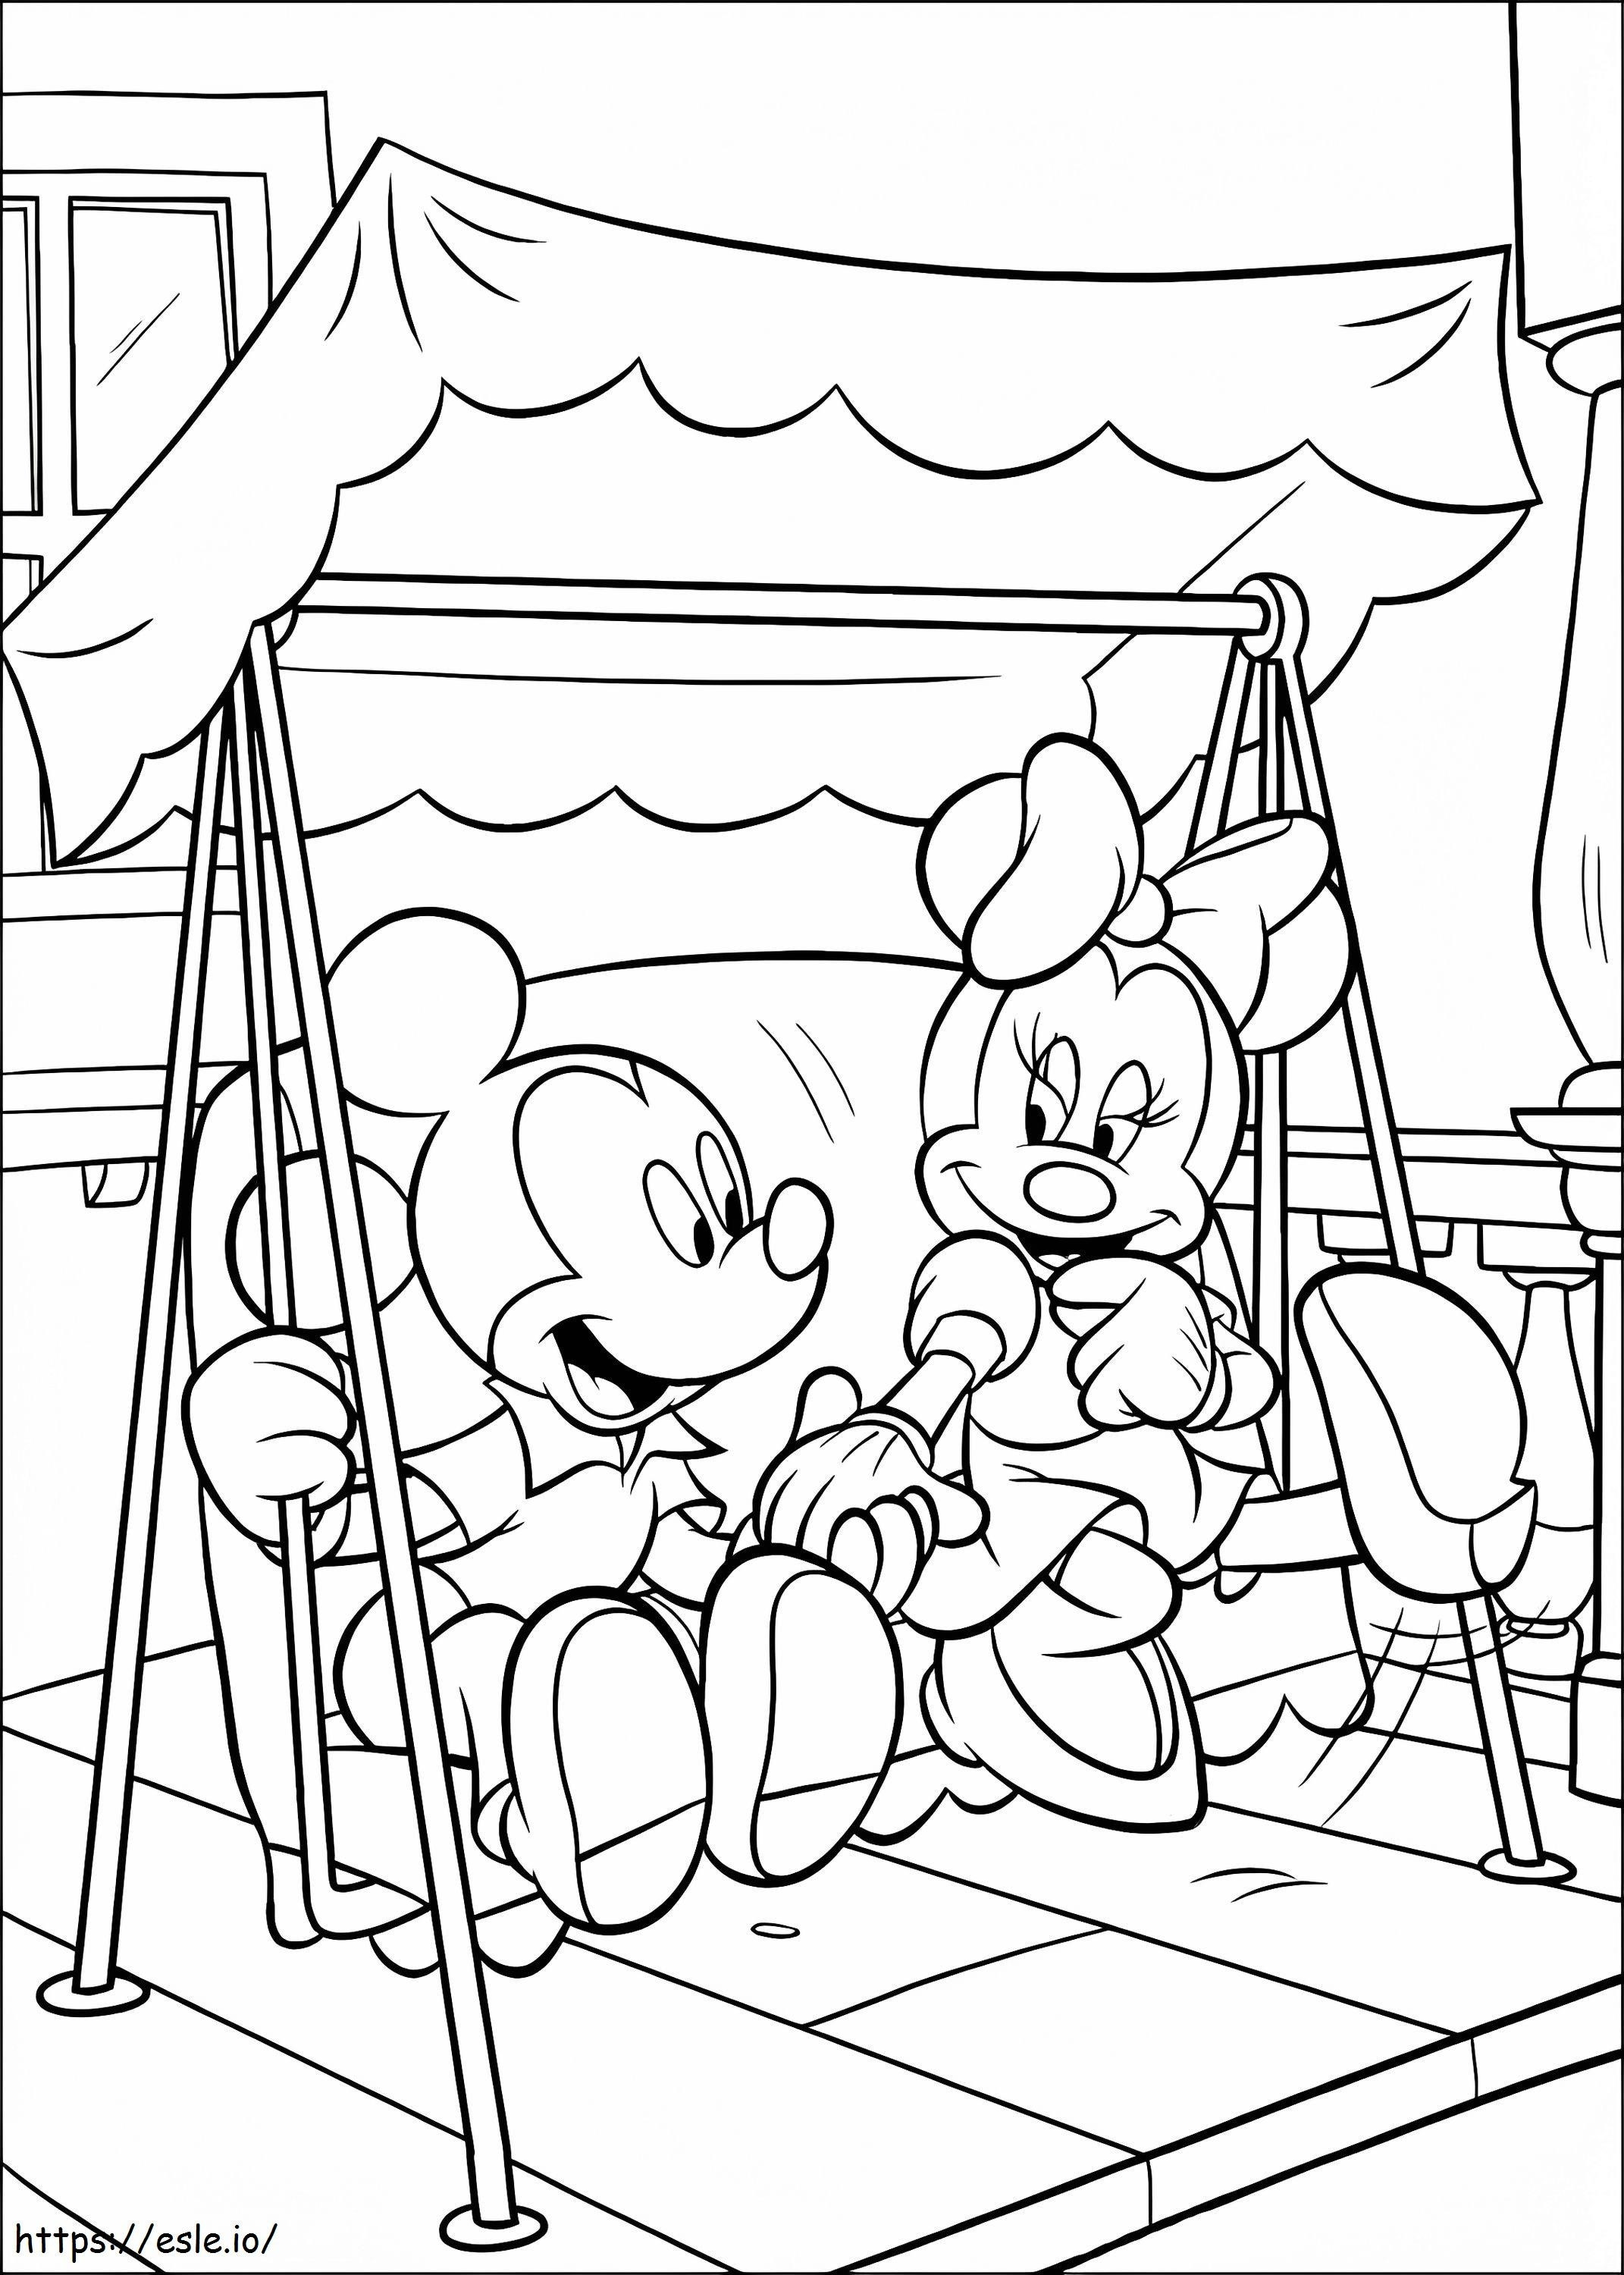 Mickey ve Minnie Arkadaş boyama